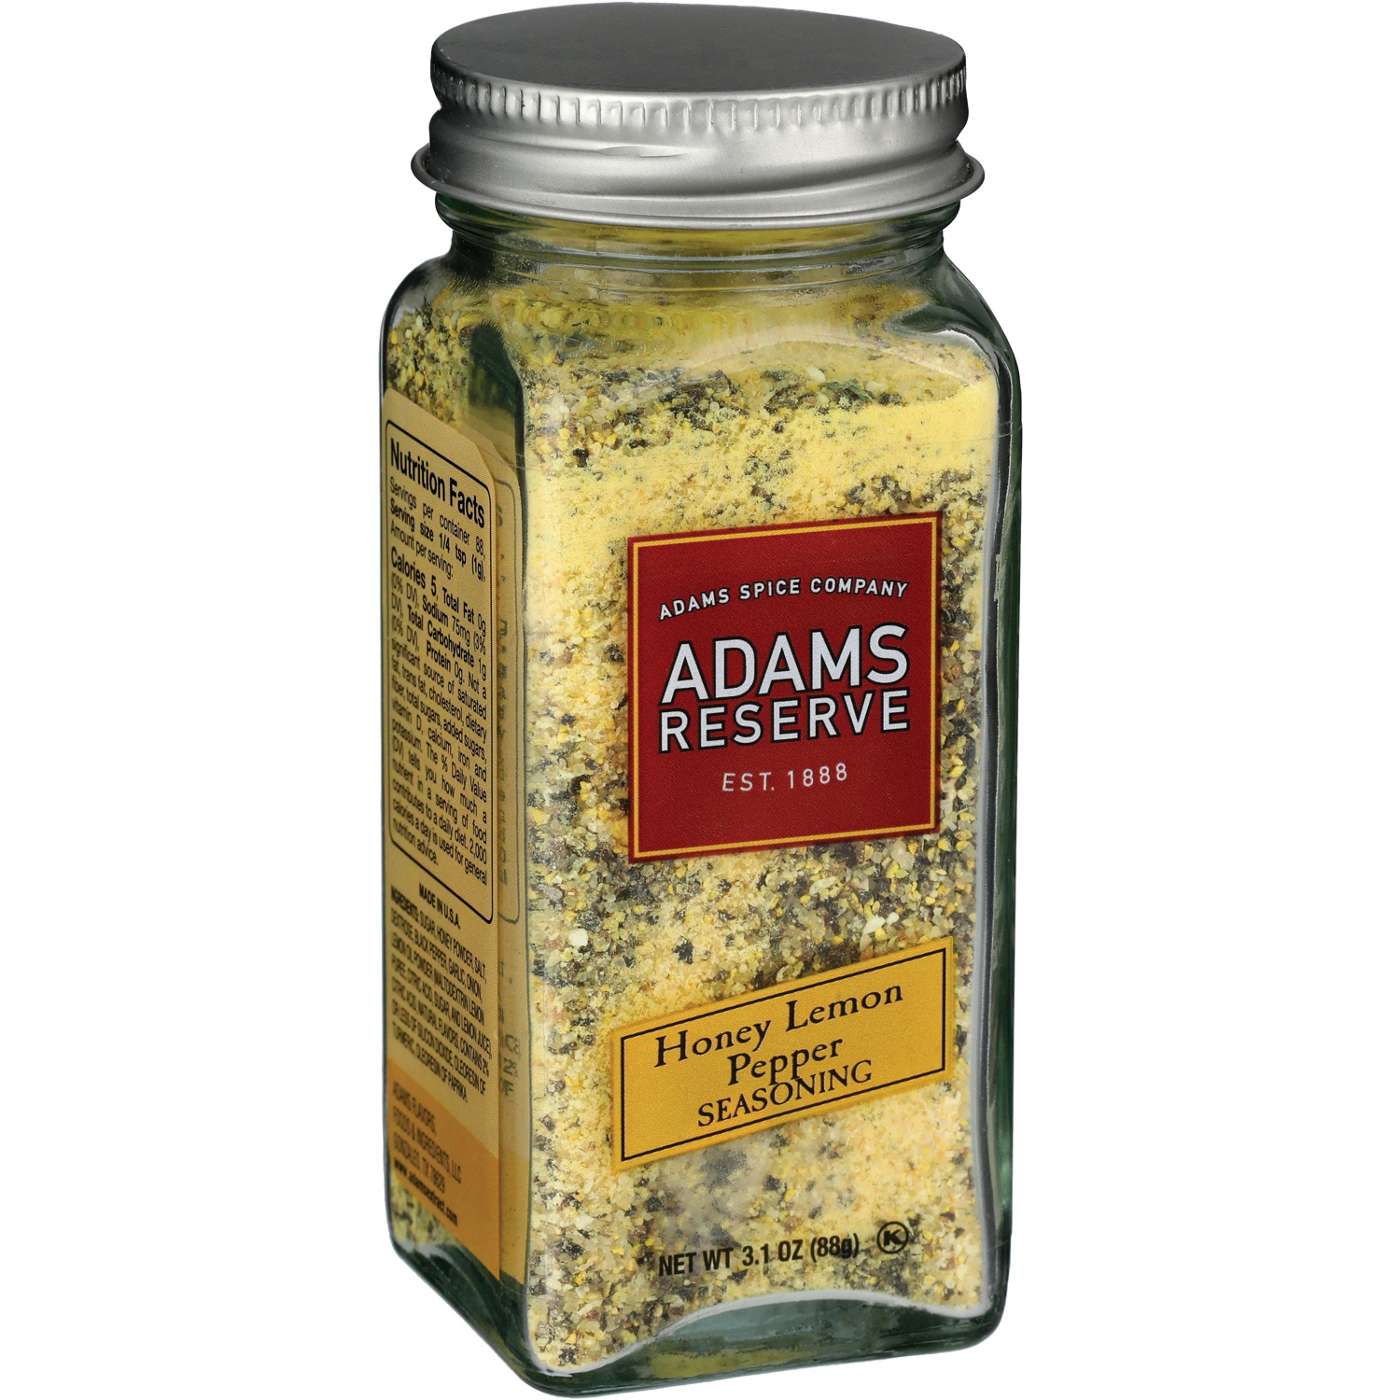 Adams Reserve Honey Lemon Pepper Seasoning; image 2 of 2